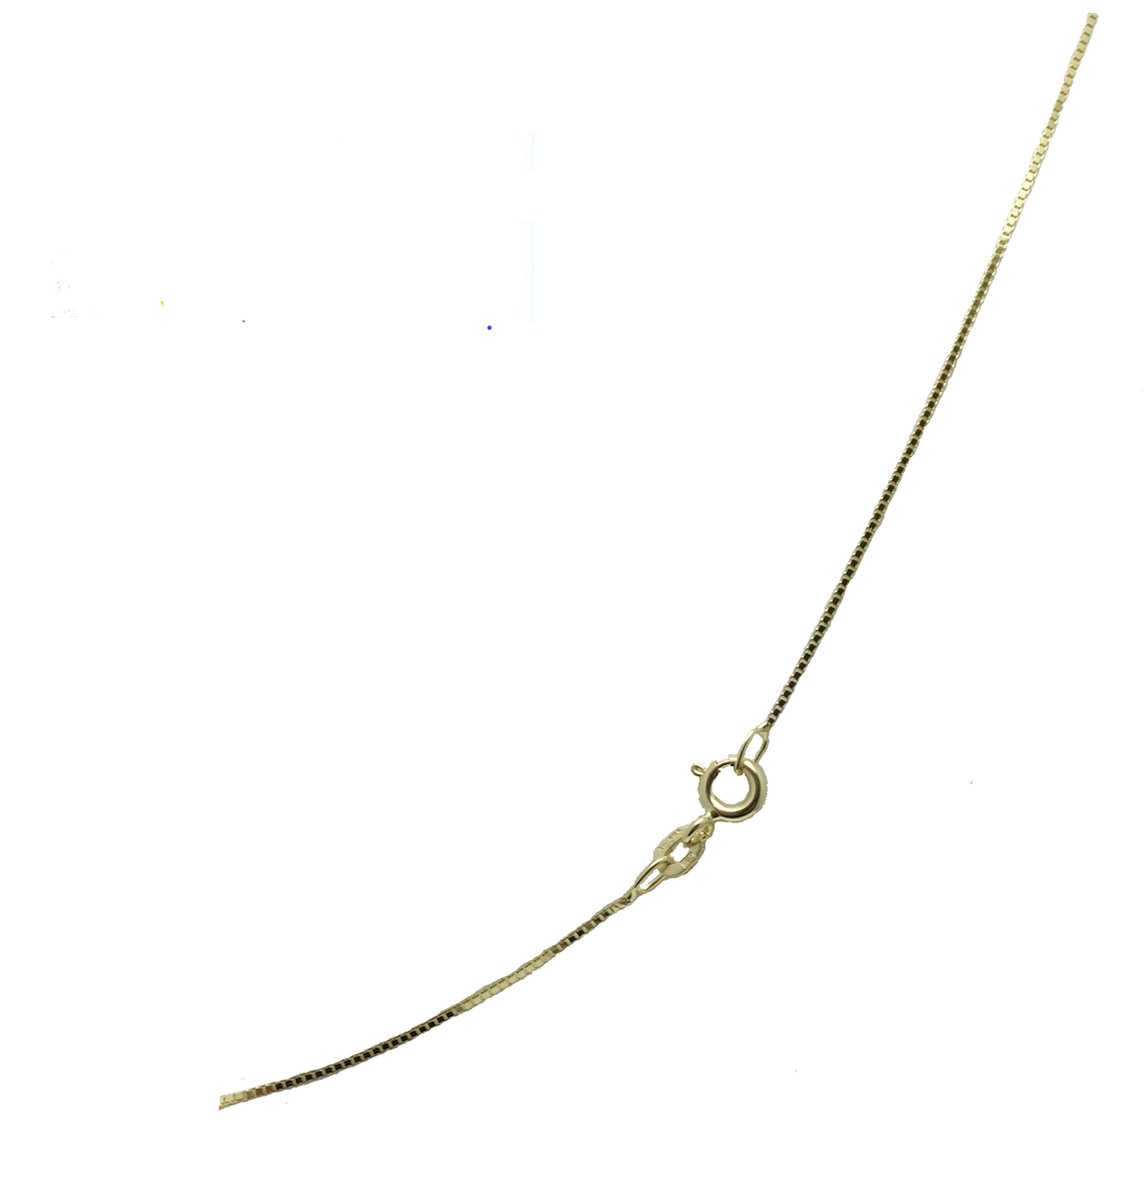 ketting - venetiaans - geel goud - 42 cm - 1.7 gram - 0.7 mm breed - 14 karaat - verlinden juwelier